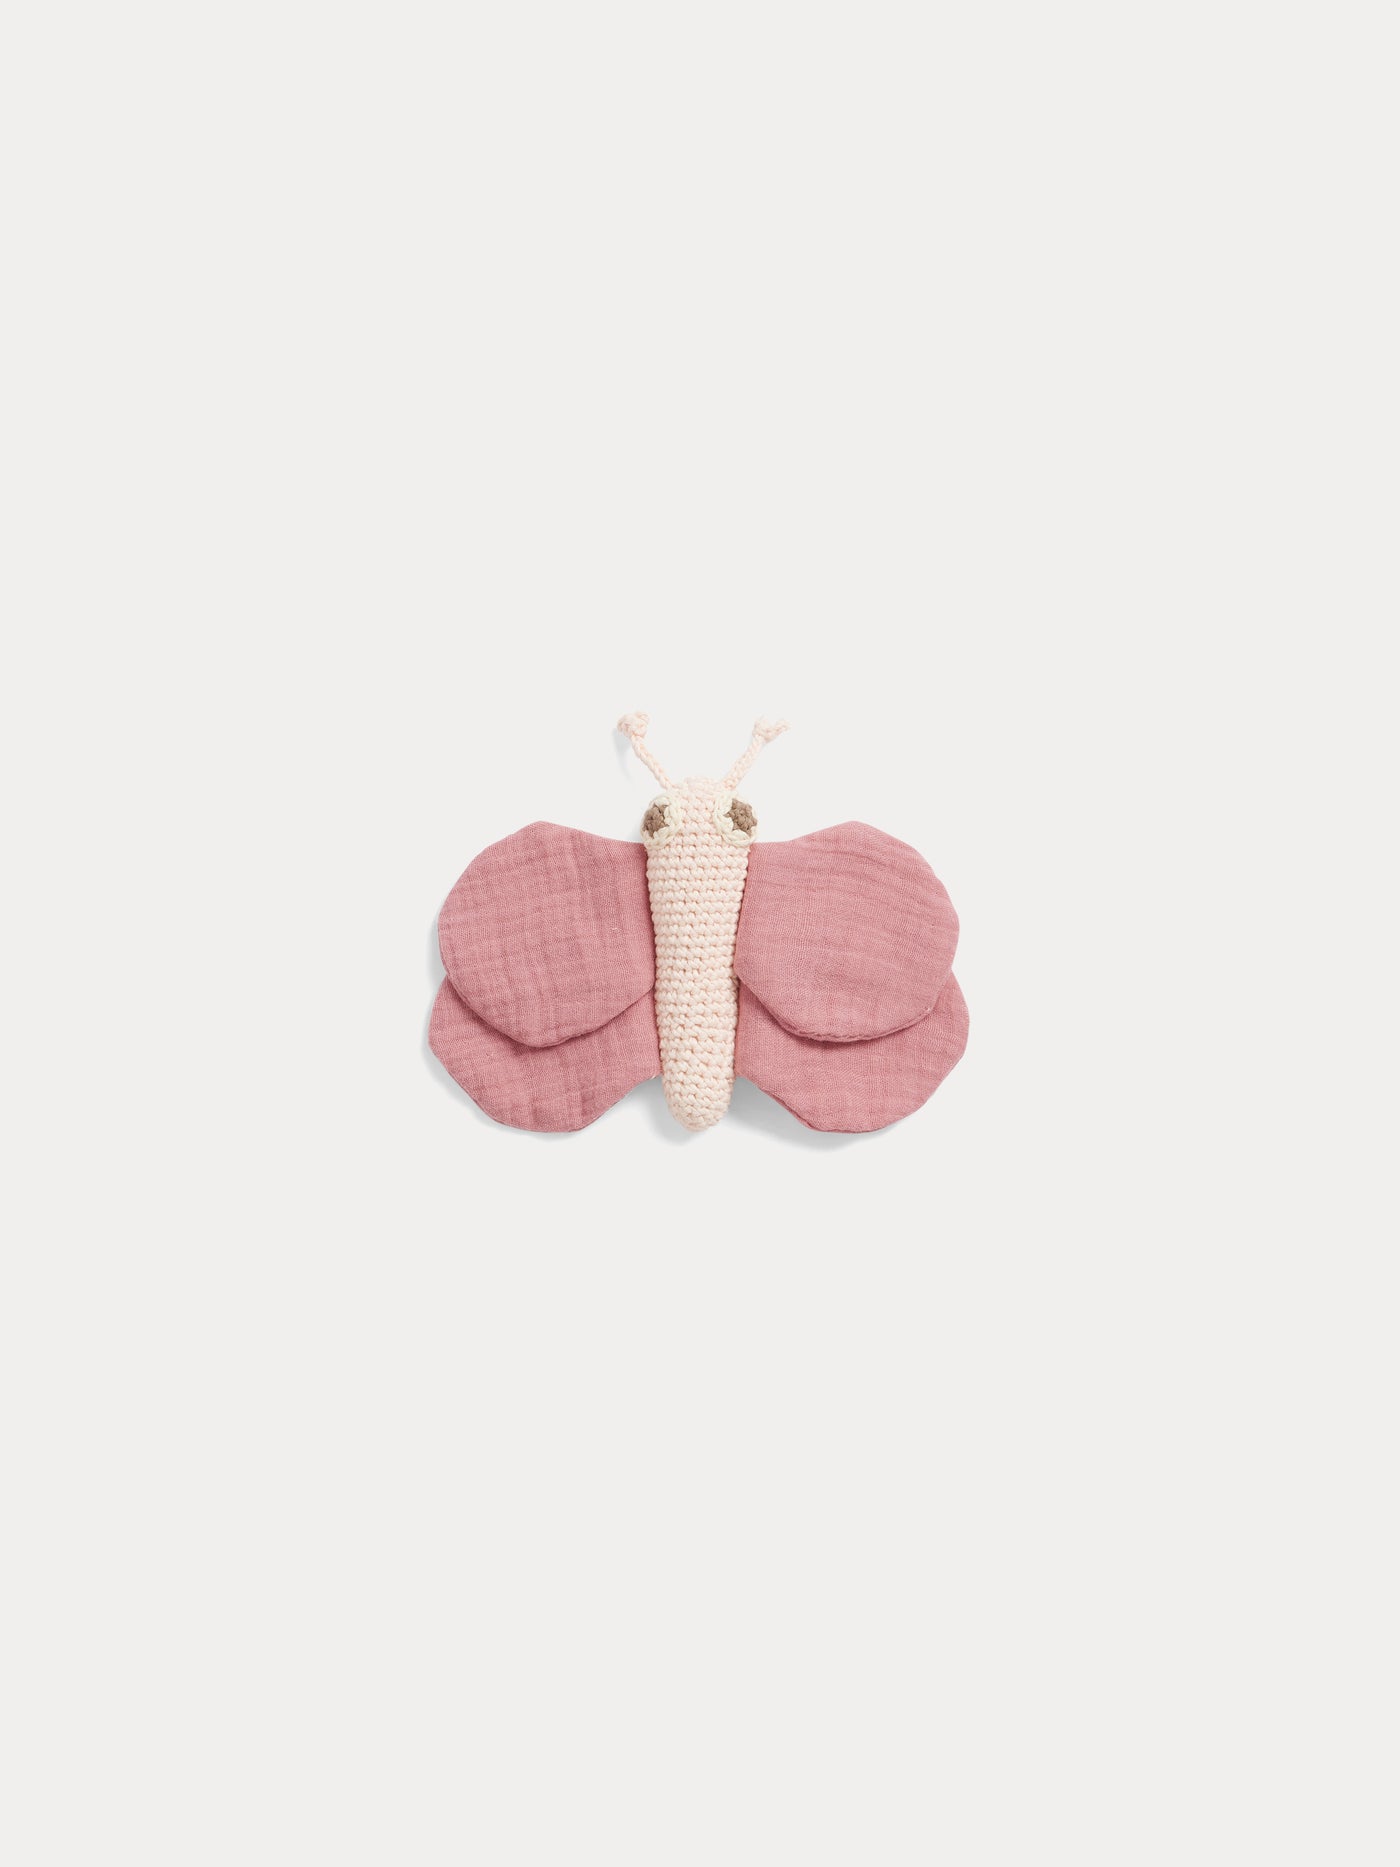 Papillon Crochet Toy pink